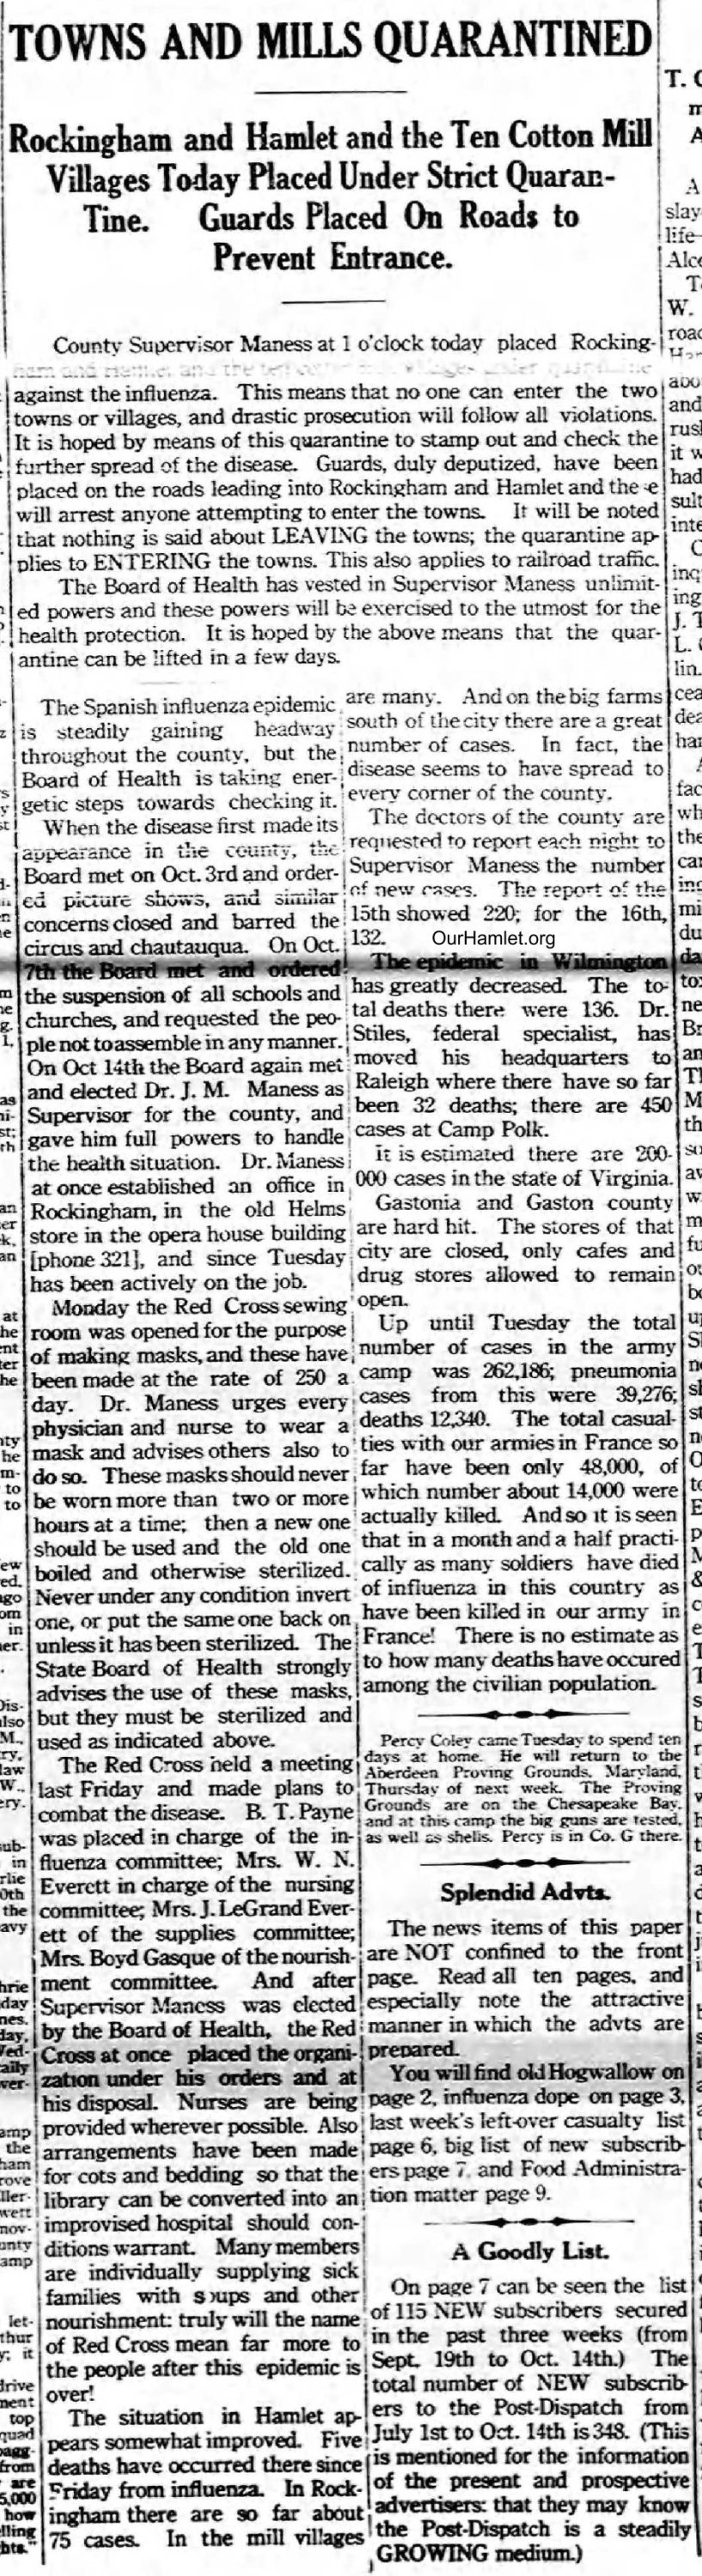 Rockingham NC Post Dispatch October 17, 1918 OH.jpg